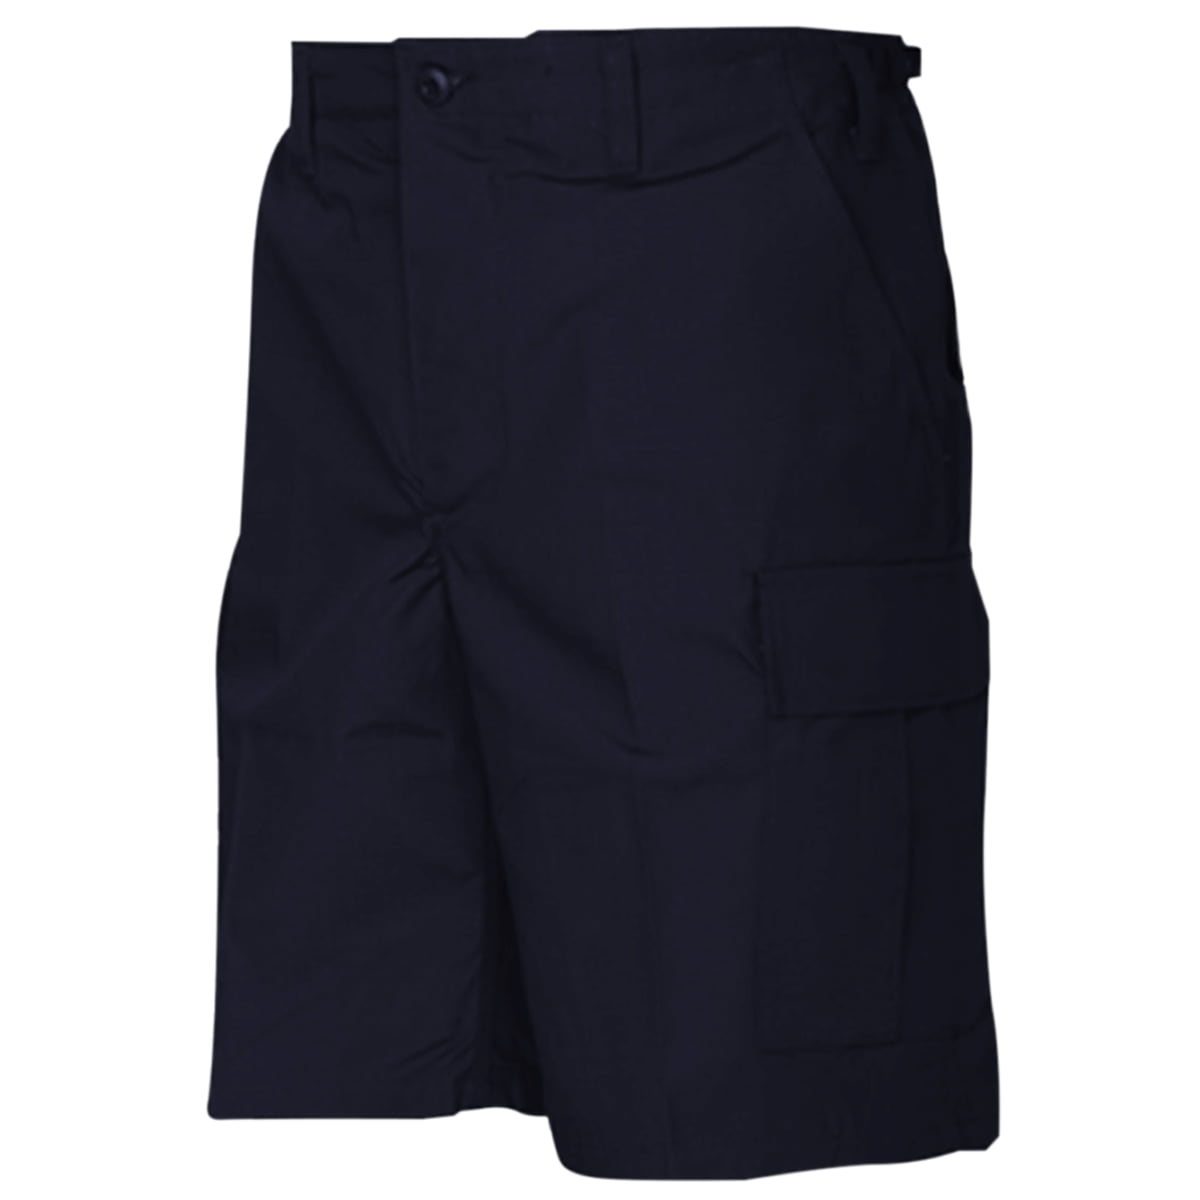 Tuff-Guard BDU Shorts - Navy Blue - Quick Uniforms